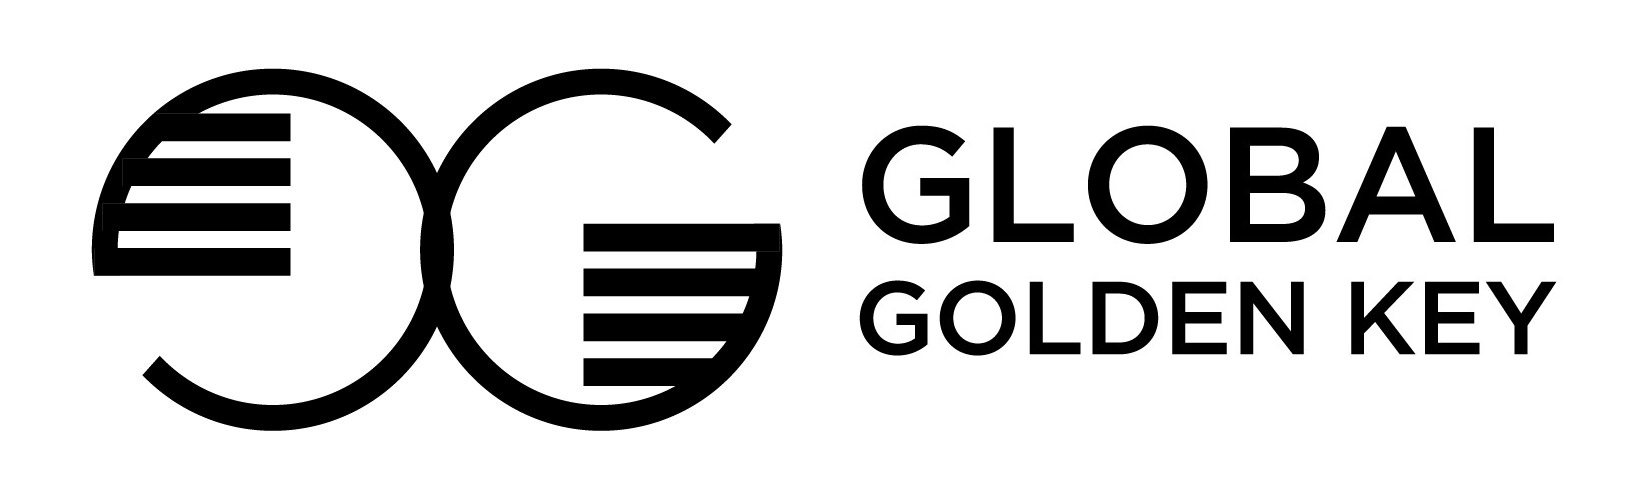 Global Golden Key